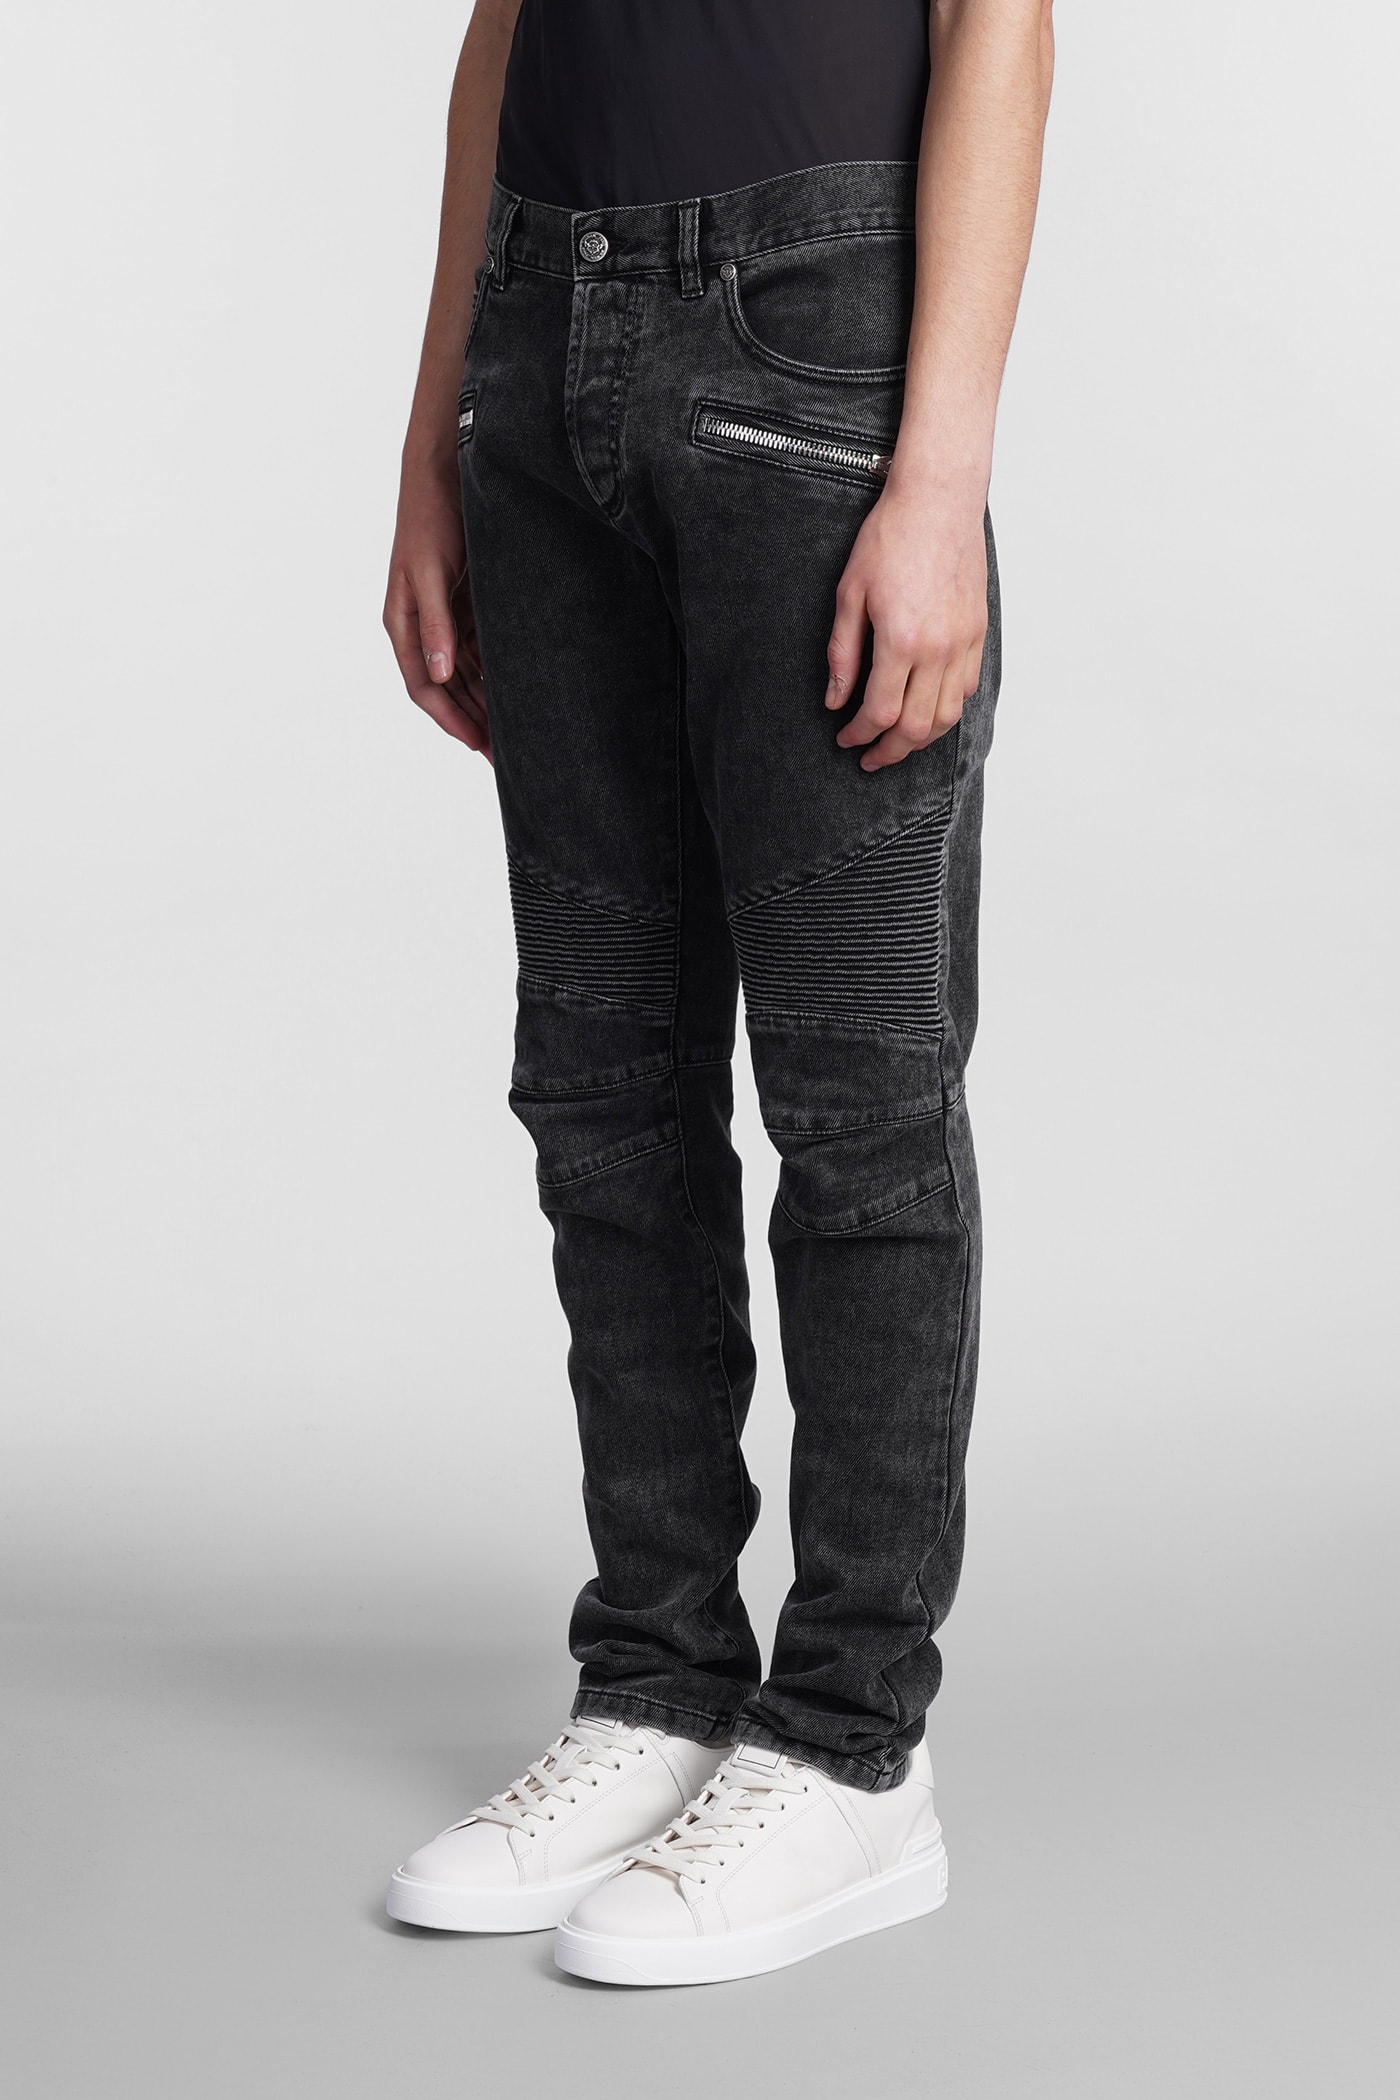 Balmain Tapered Jeans In | ModeSens